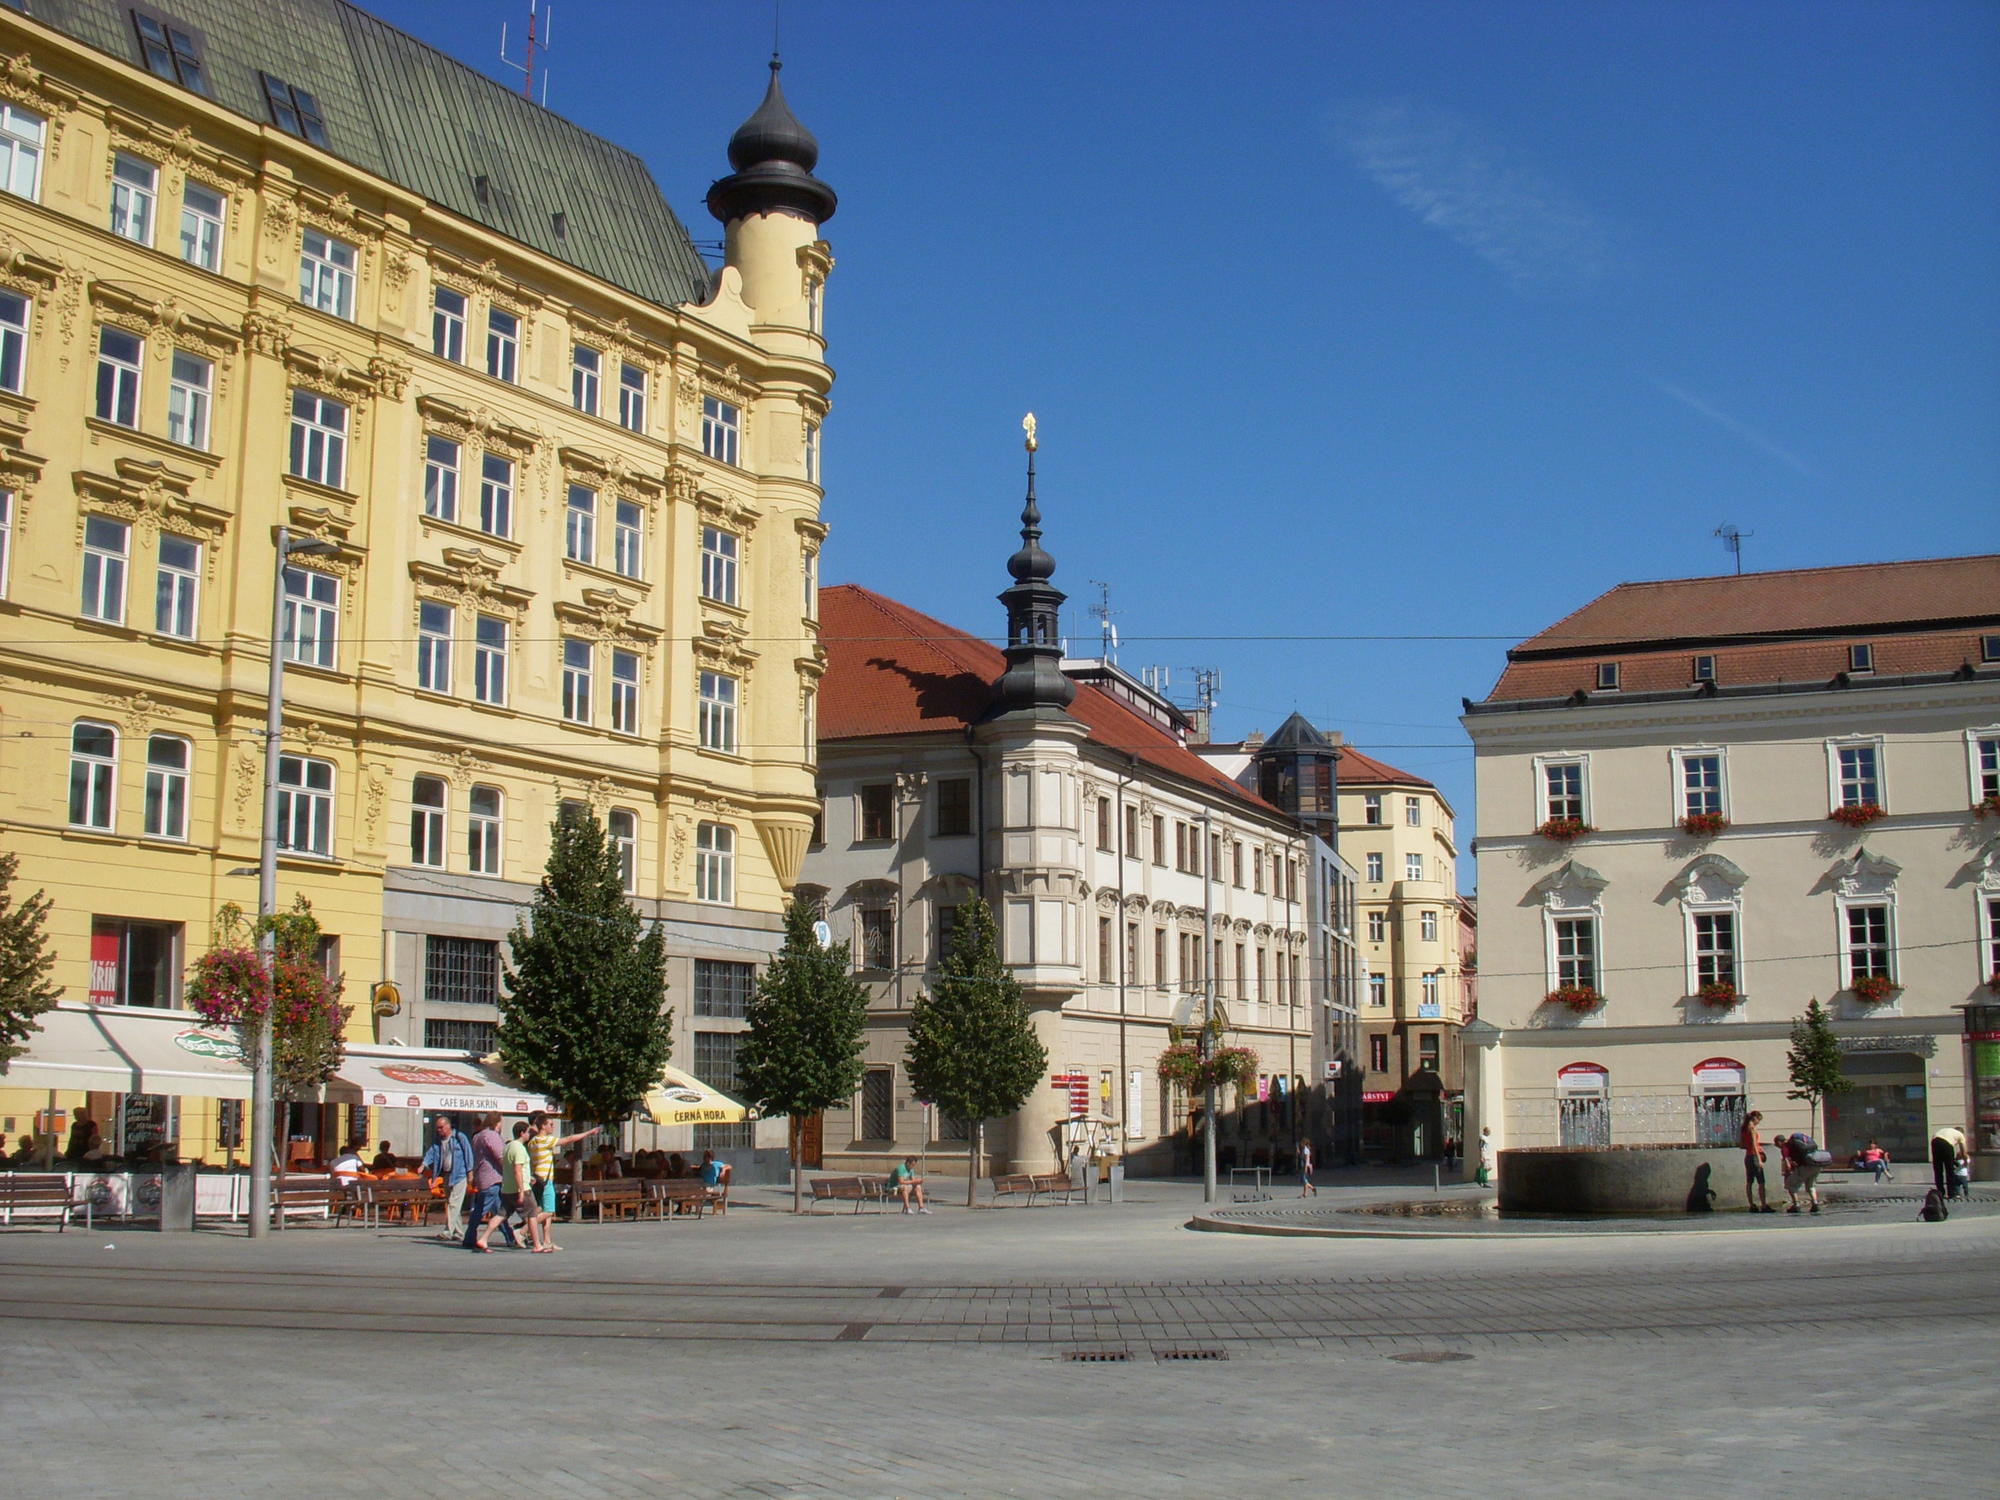 Námestí Svobody (Platz der Freiheit)